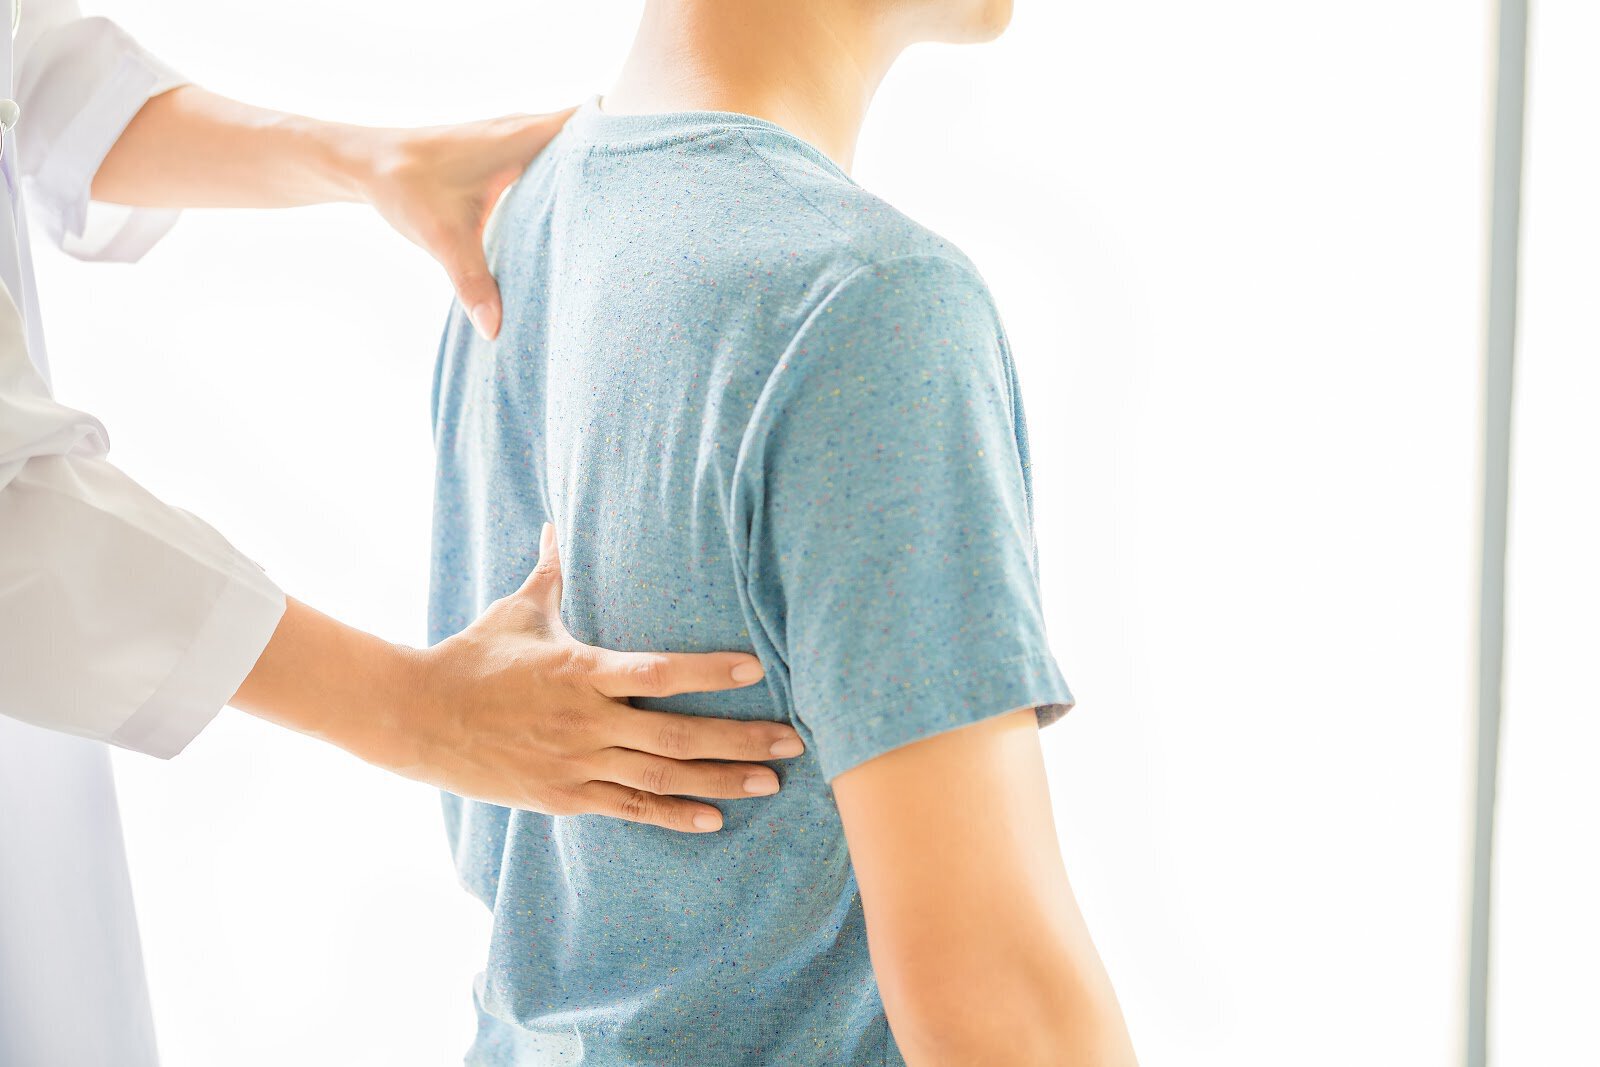 Phoenix back pain treatment model wearing a green shirt